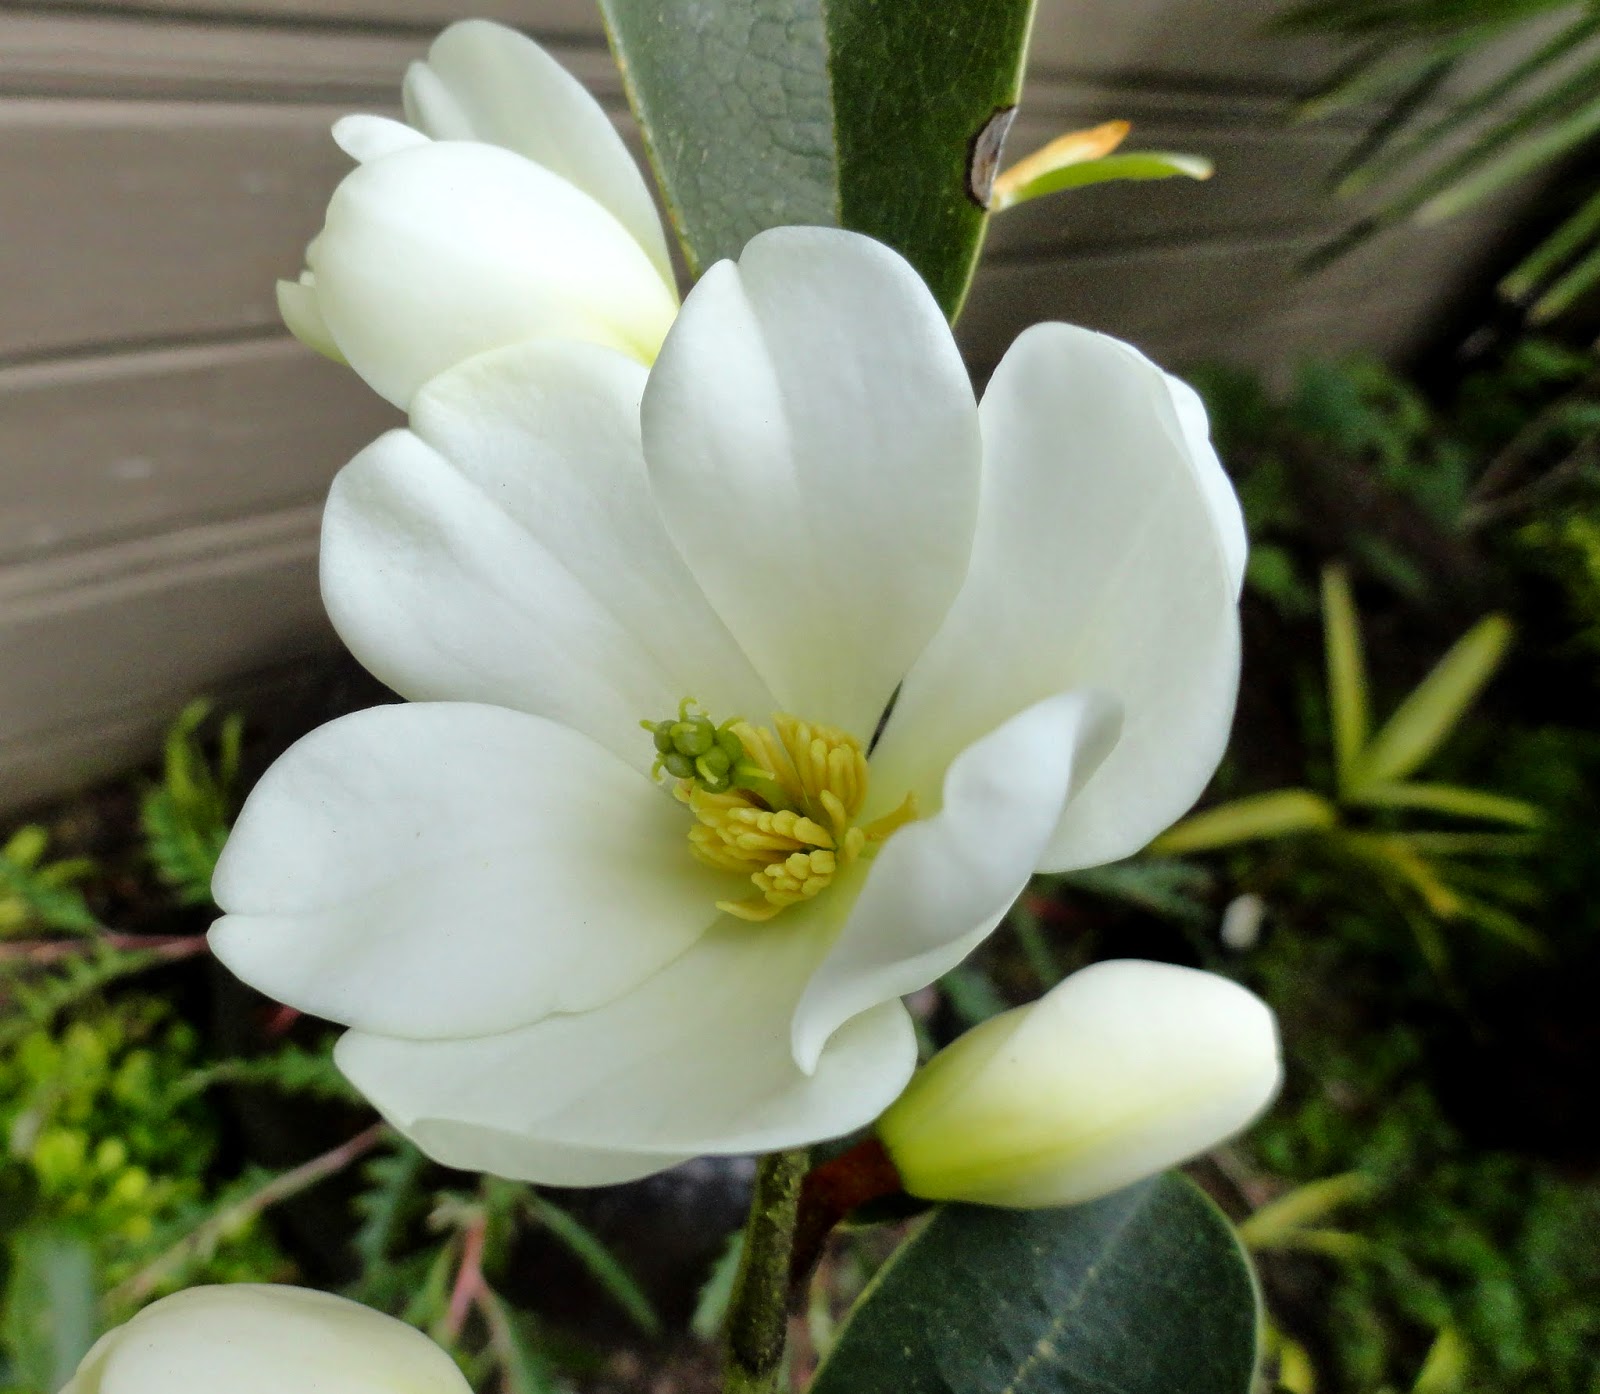 danger garden: Magnolia laevifolia is my favorite plant in the